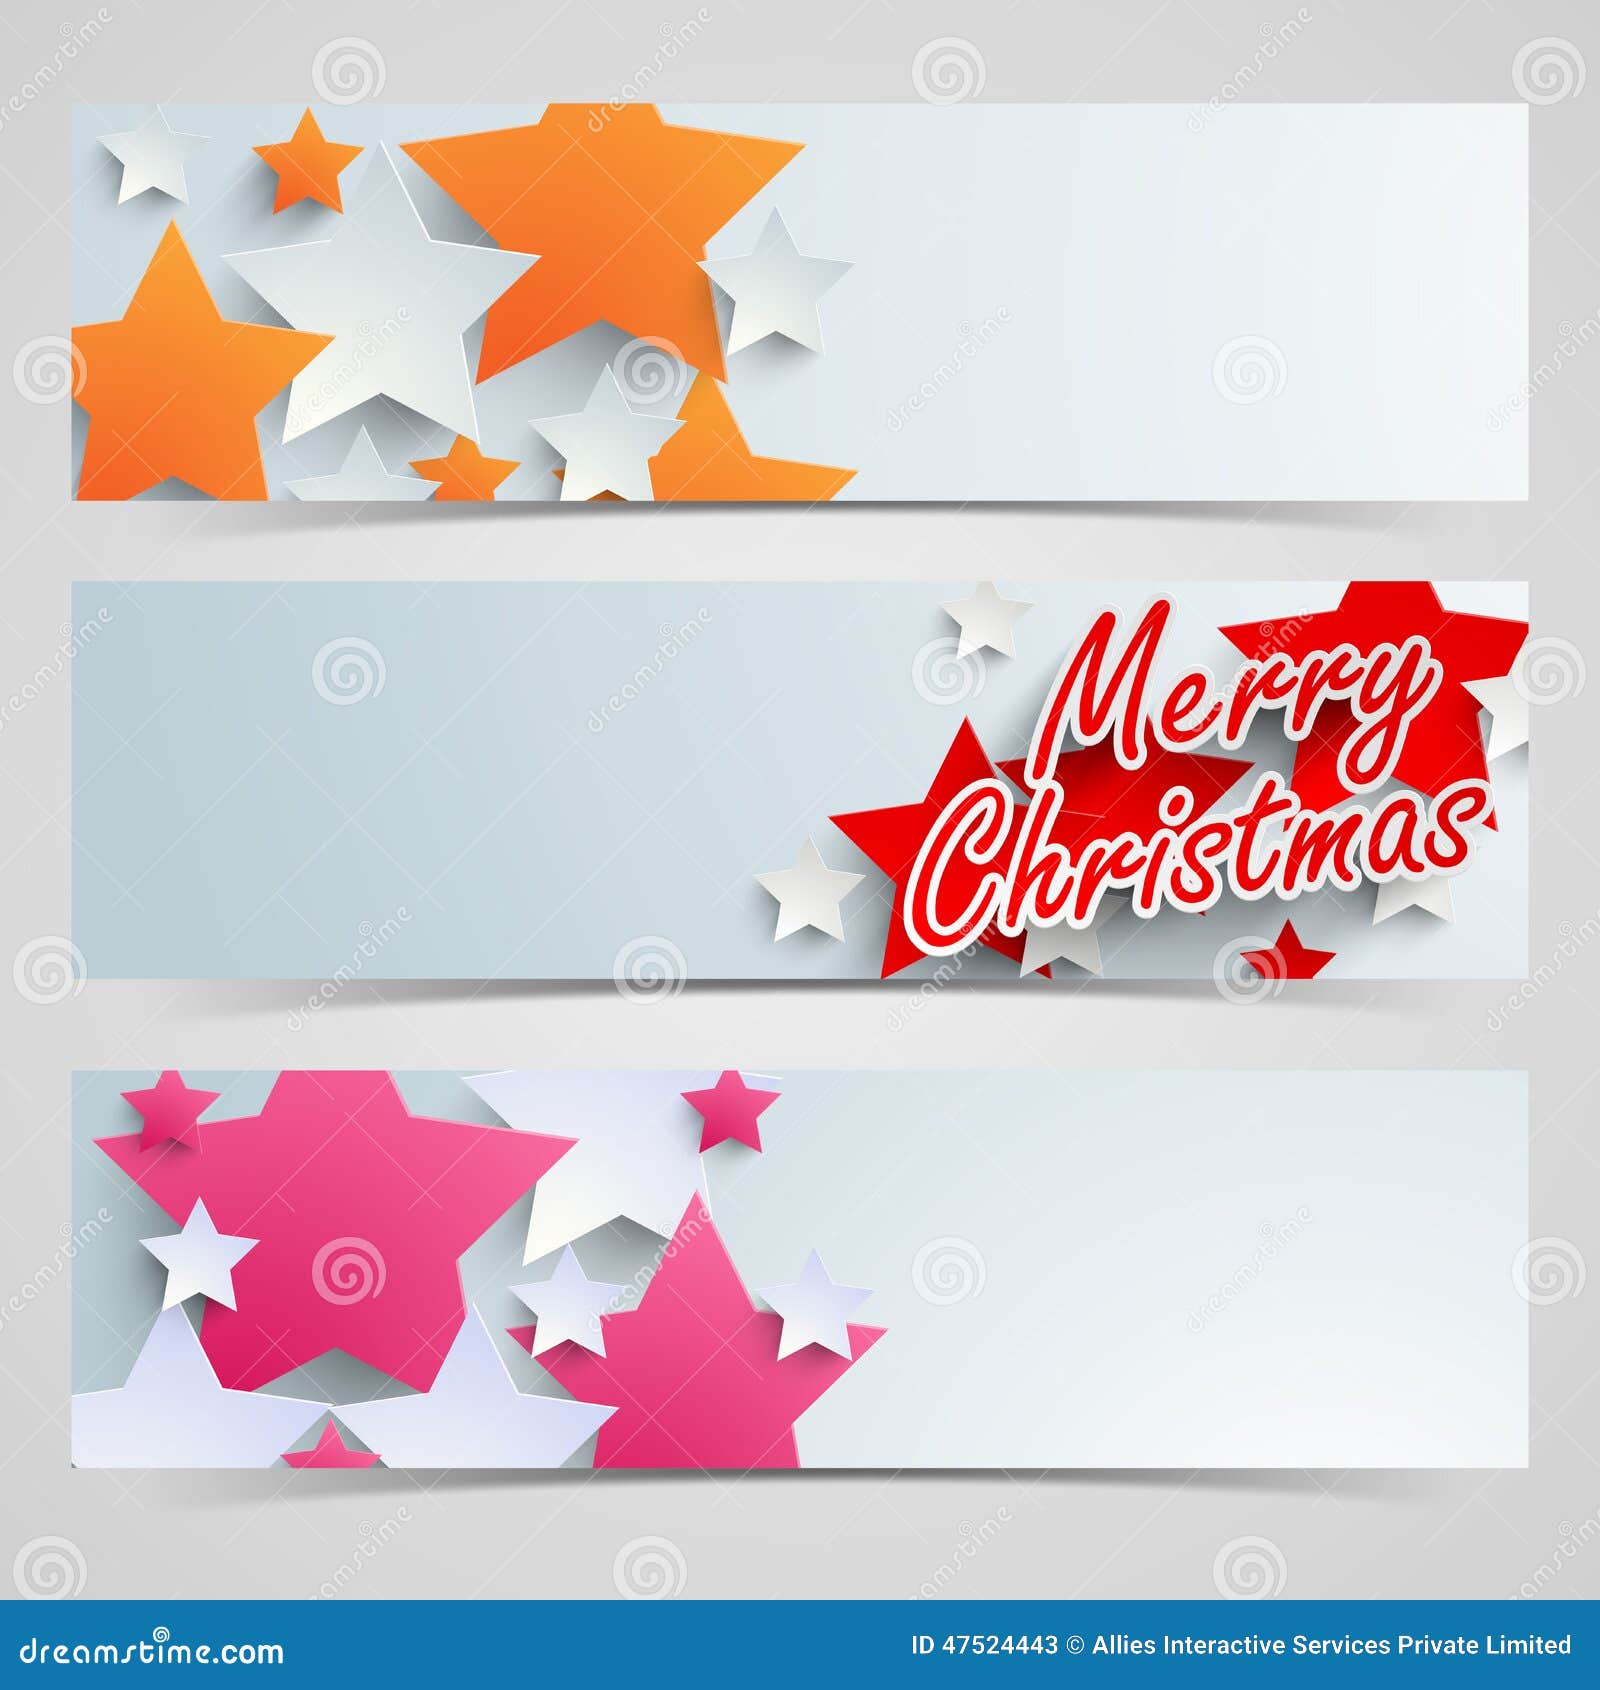 Merry Christmas Celebration Web Header or Banner Set. Stock ...